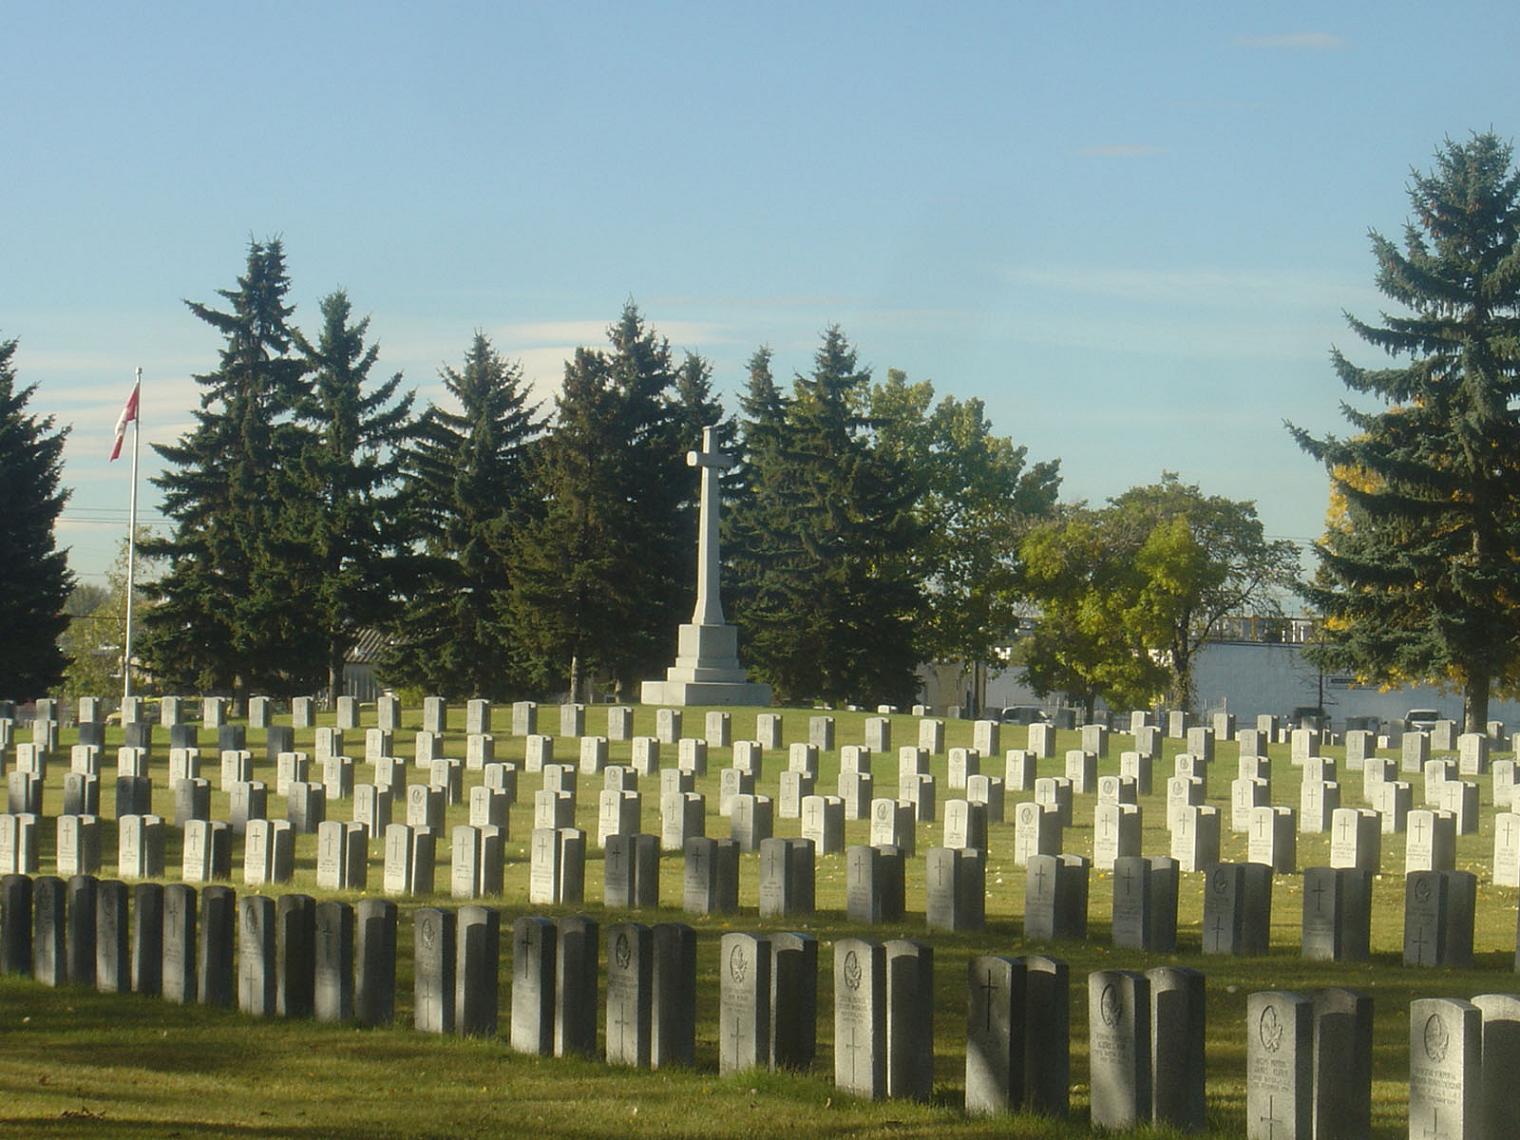 Calgary (Burnsland) Cemetery, Canada